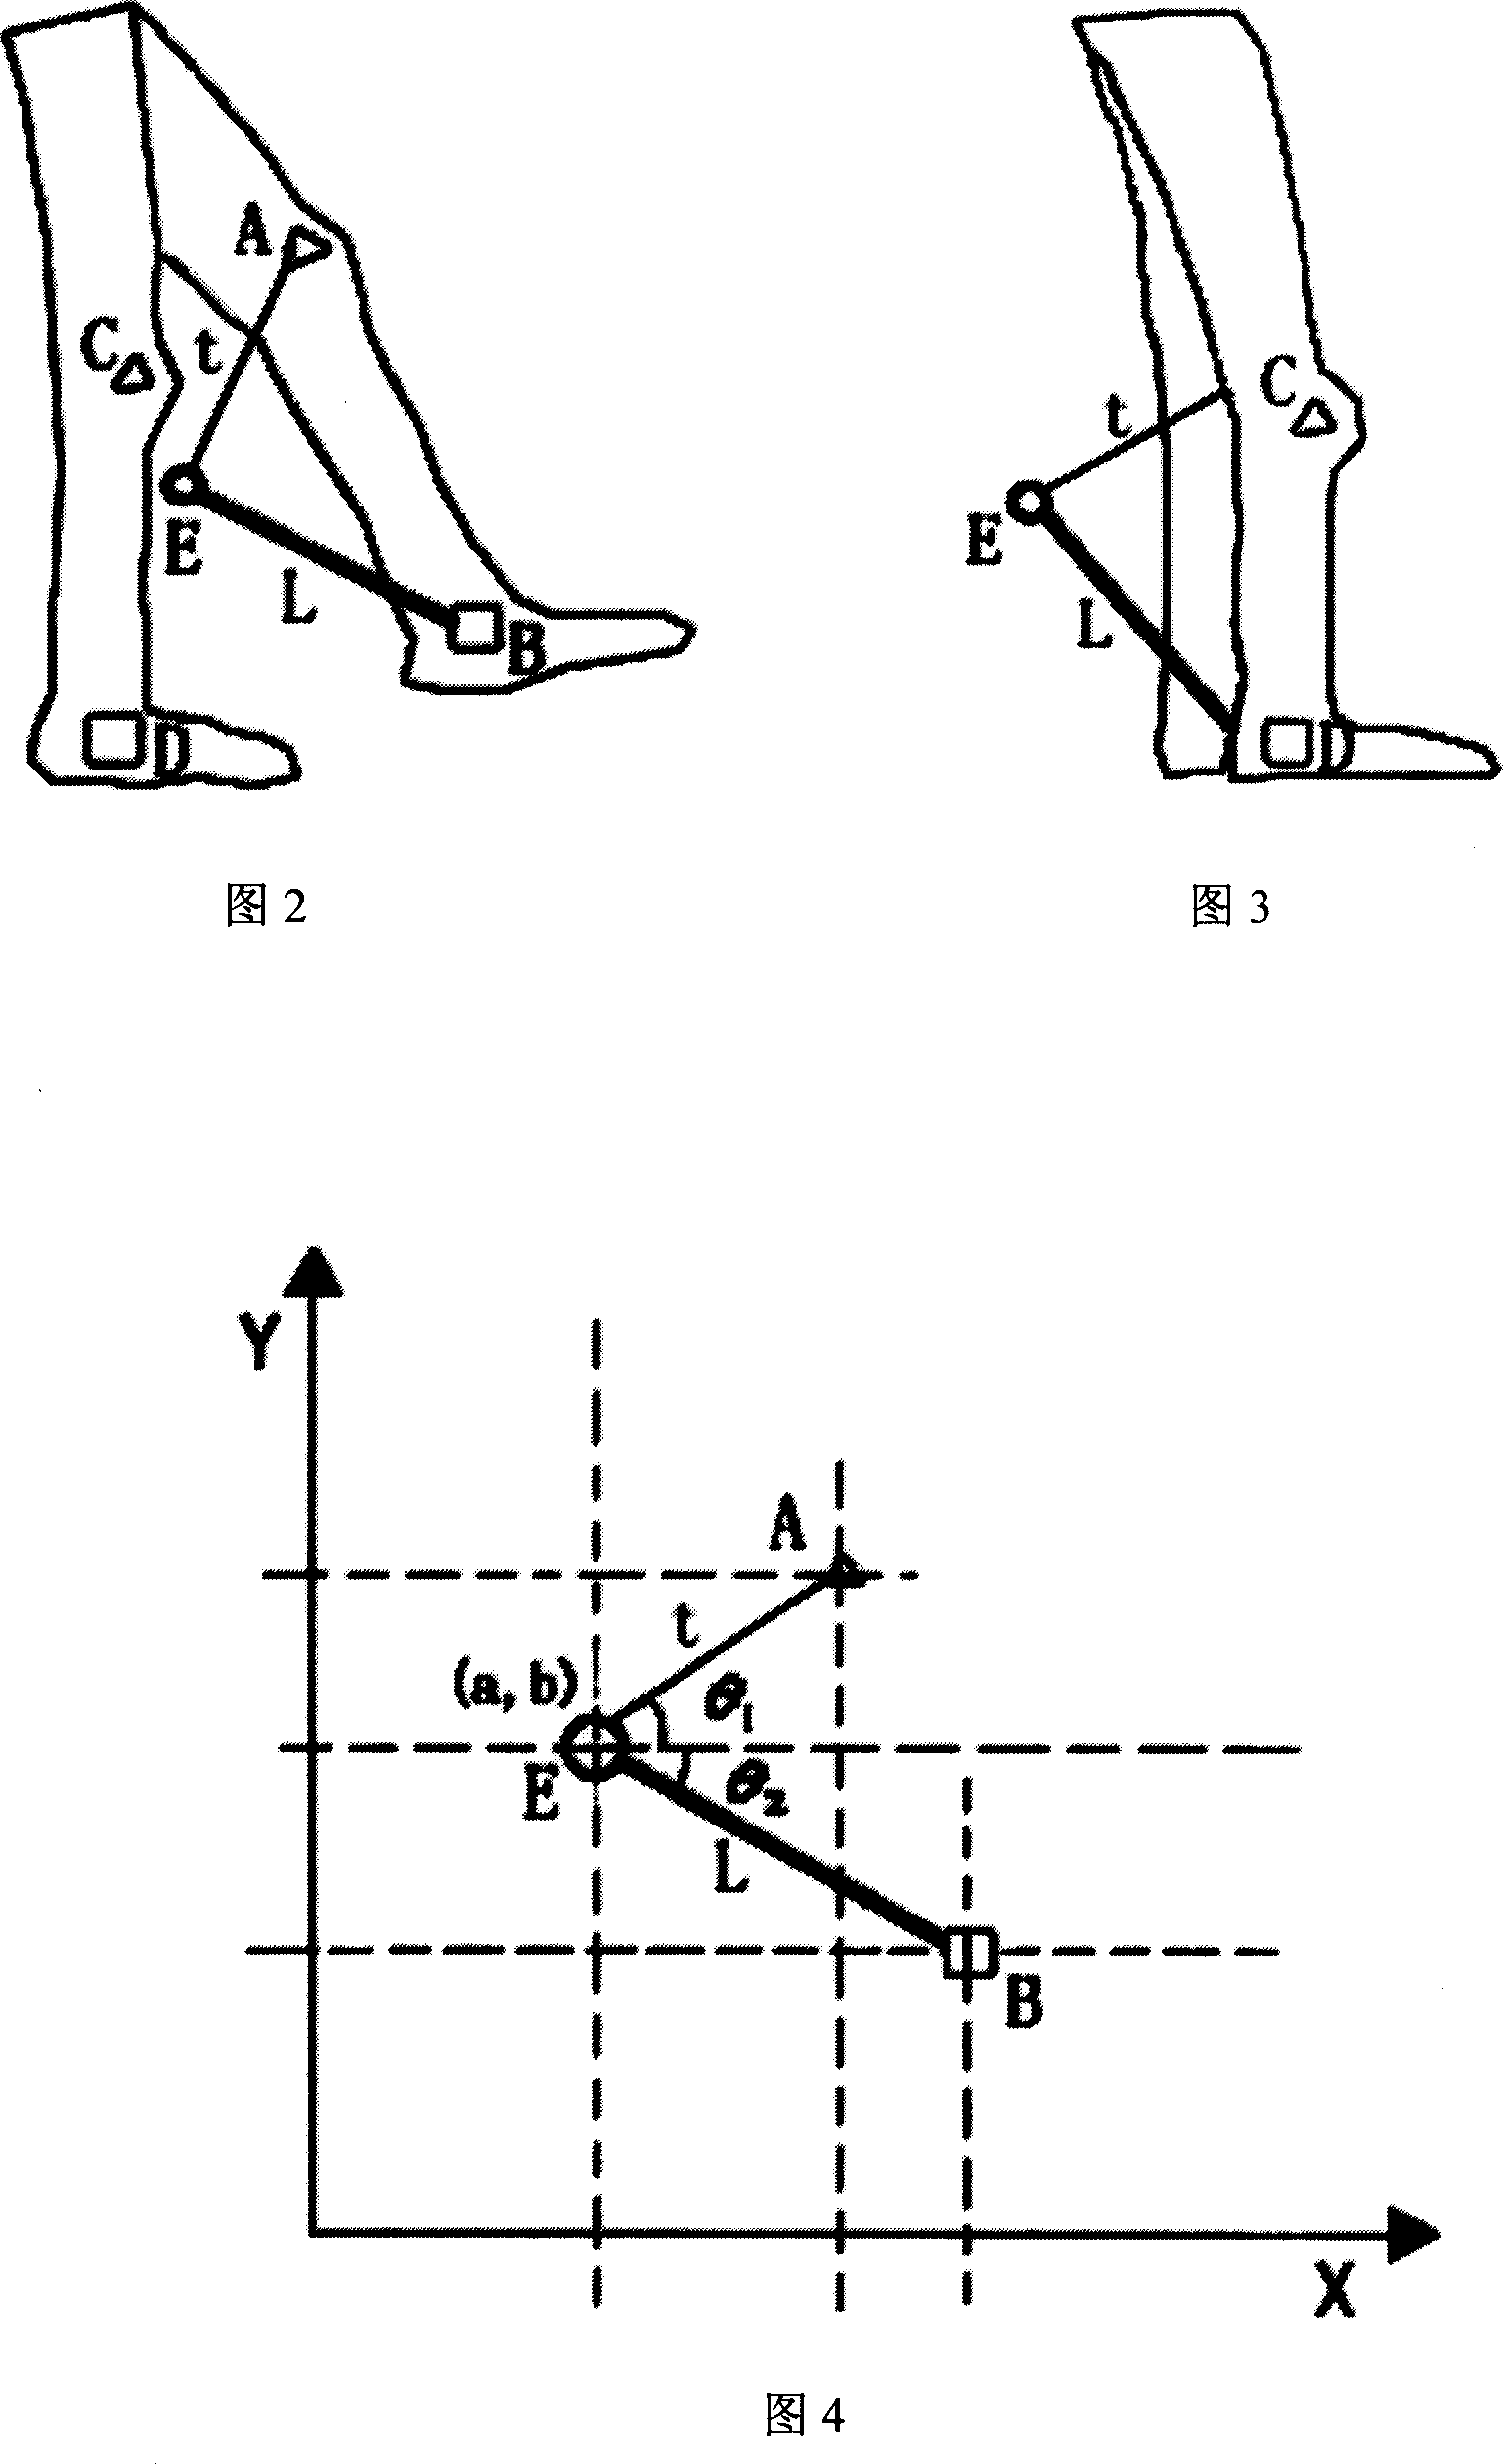 Computer aided gait analysis method based on monocular video